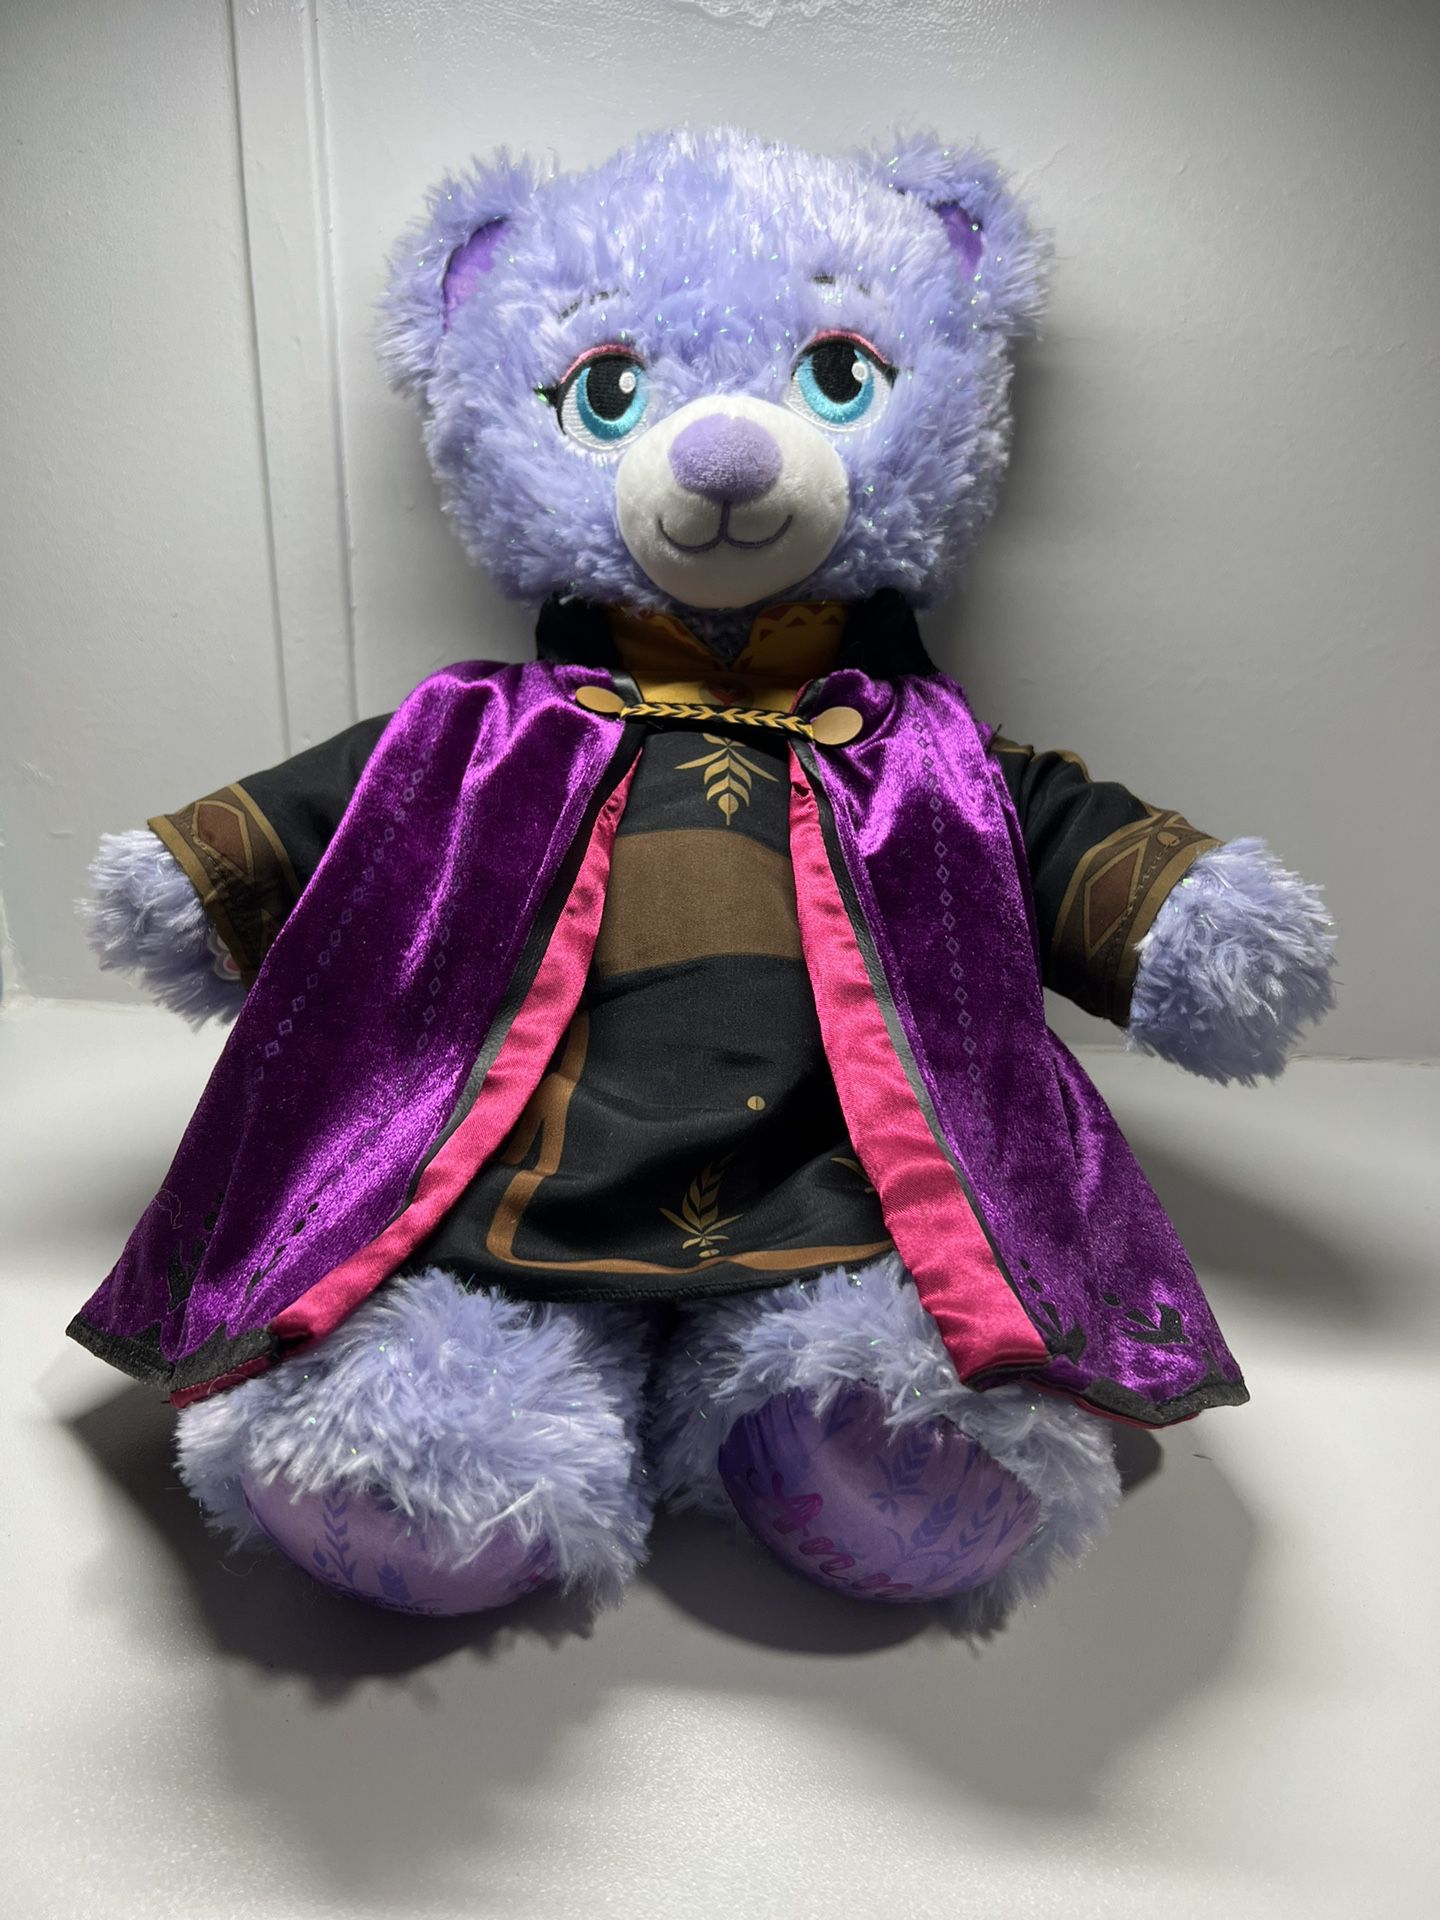 Build-A-Bear Workshop Disney Frozen 2 Anna 17 inch Bear Purple Glitter